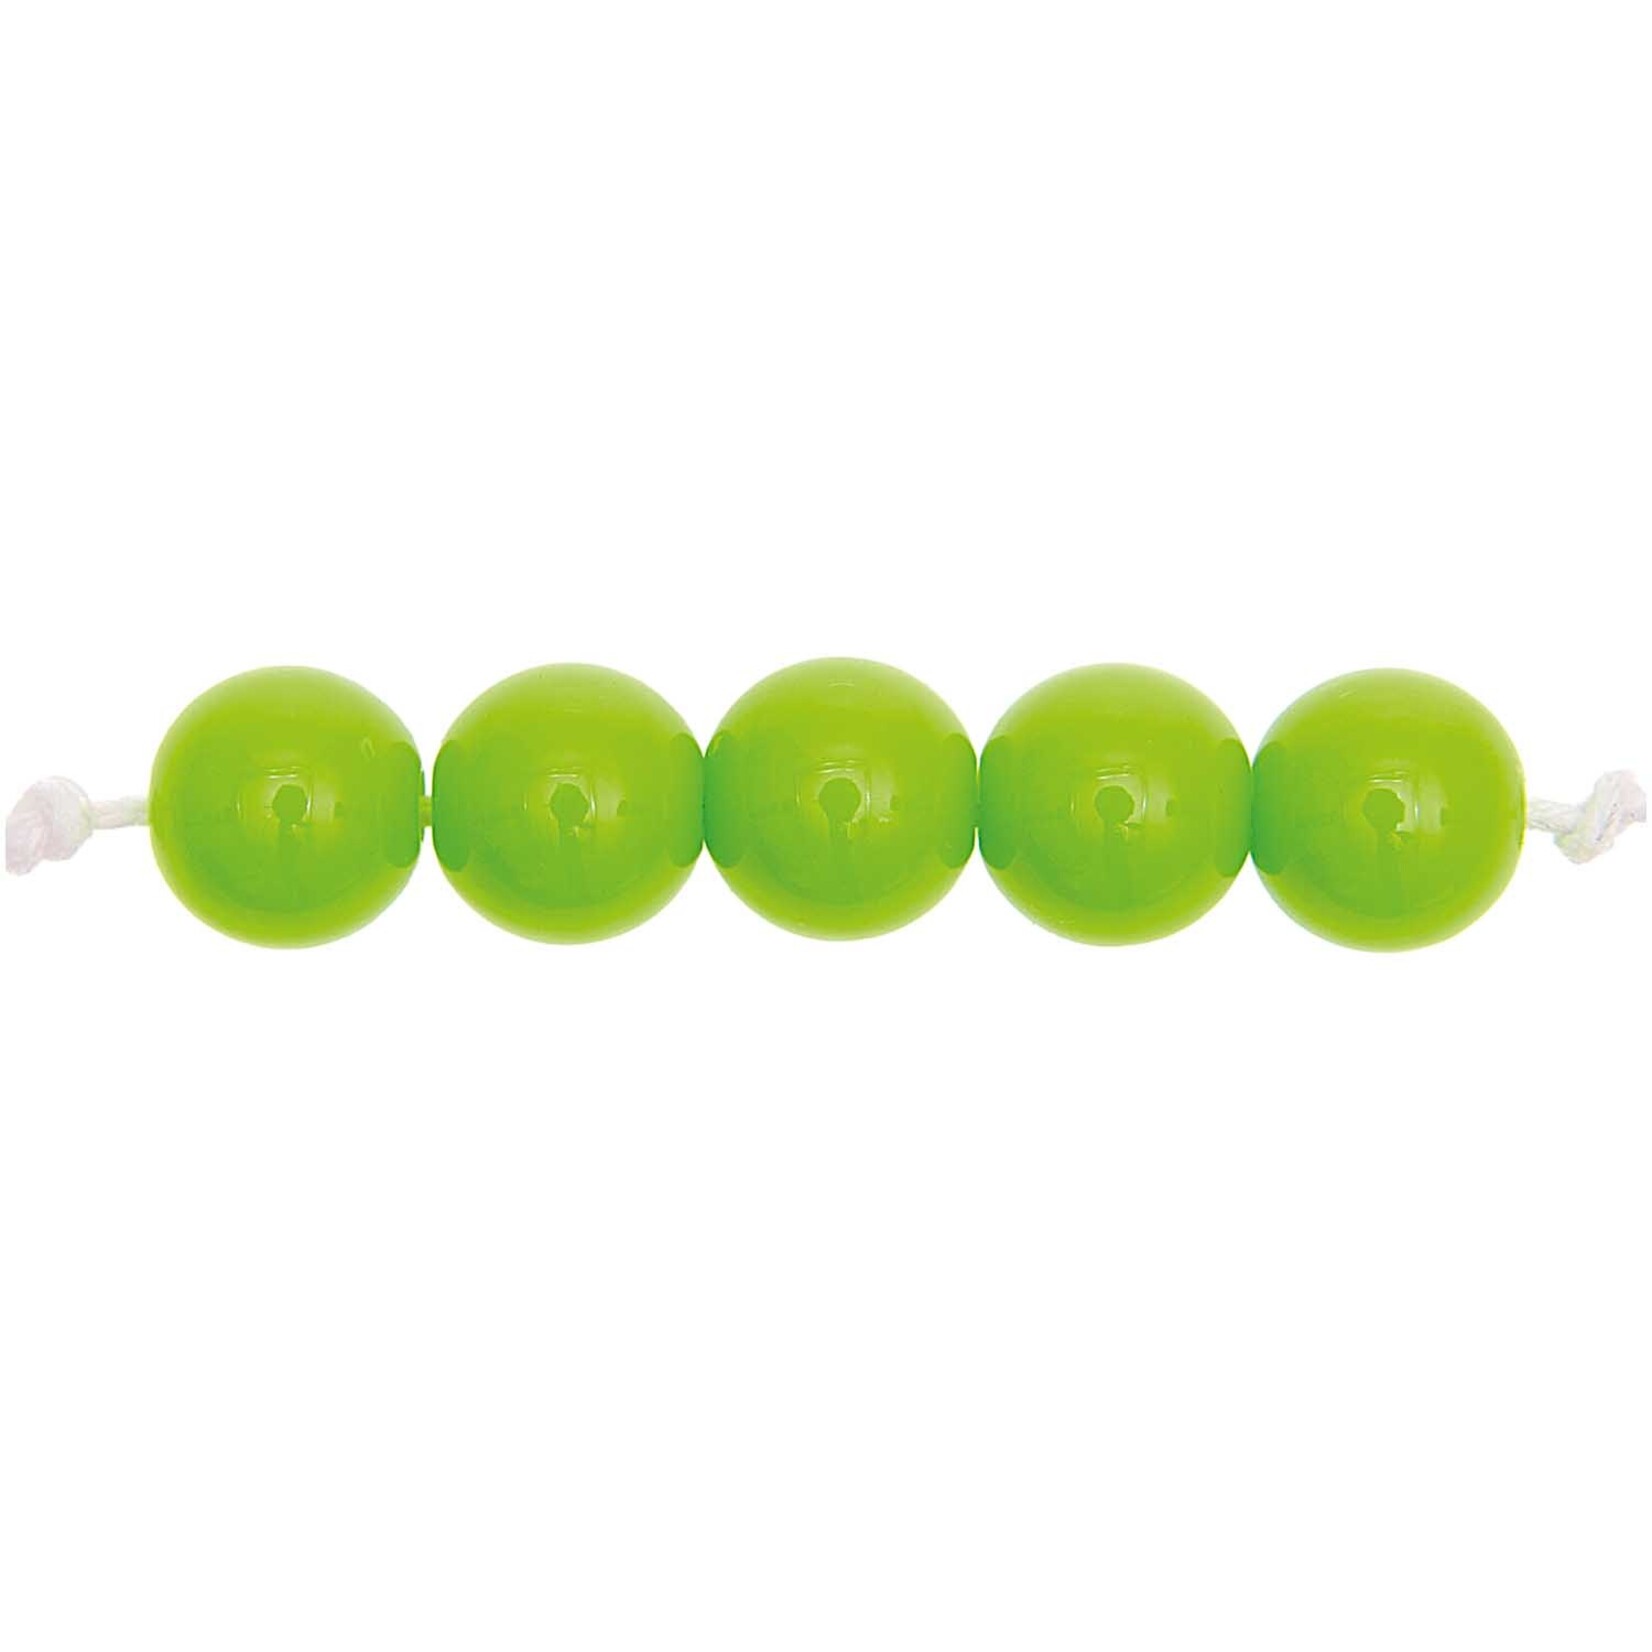 RICO Plastic parels, groen, 24 stuks, Ã˜ 10 mm